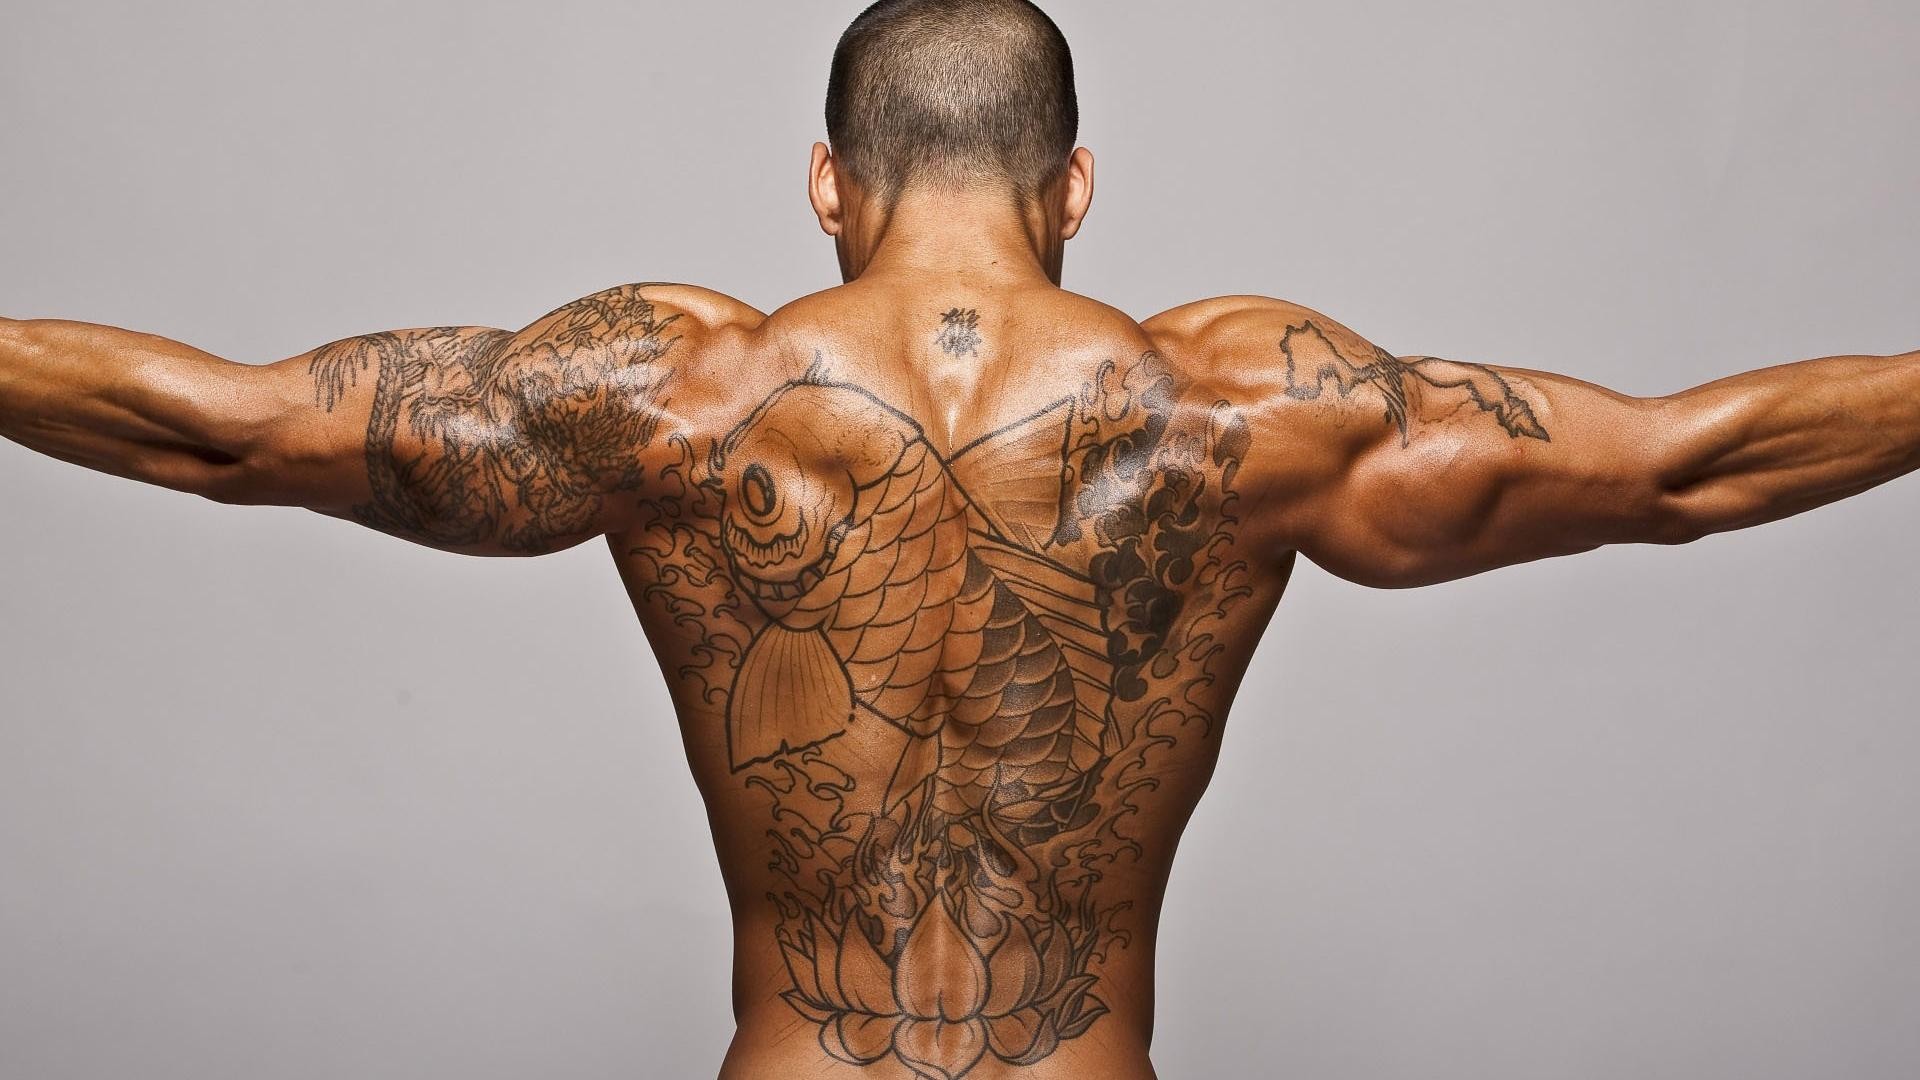 Muscles Tattoo Guys 1920x1080